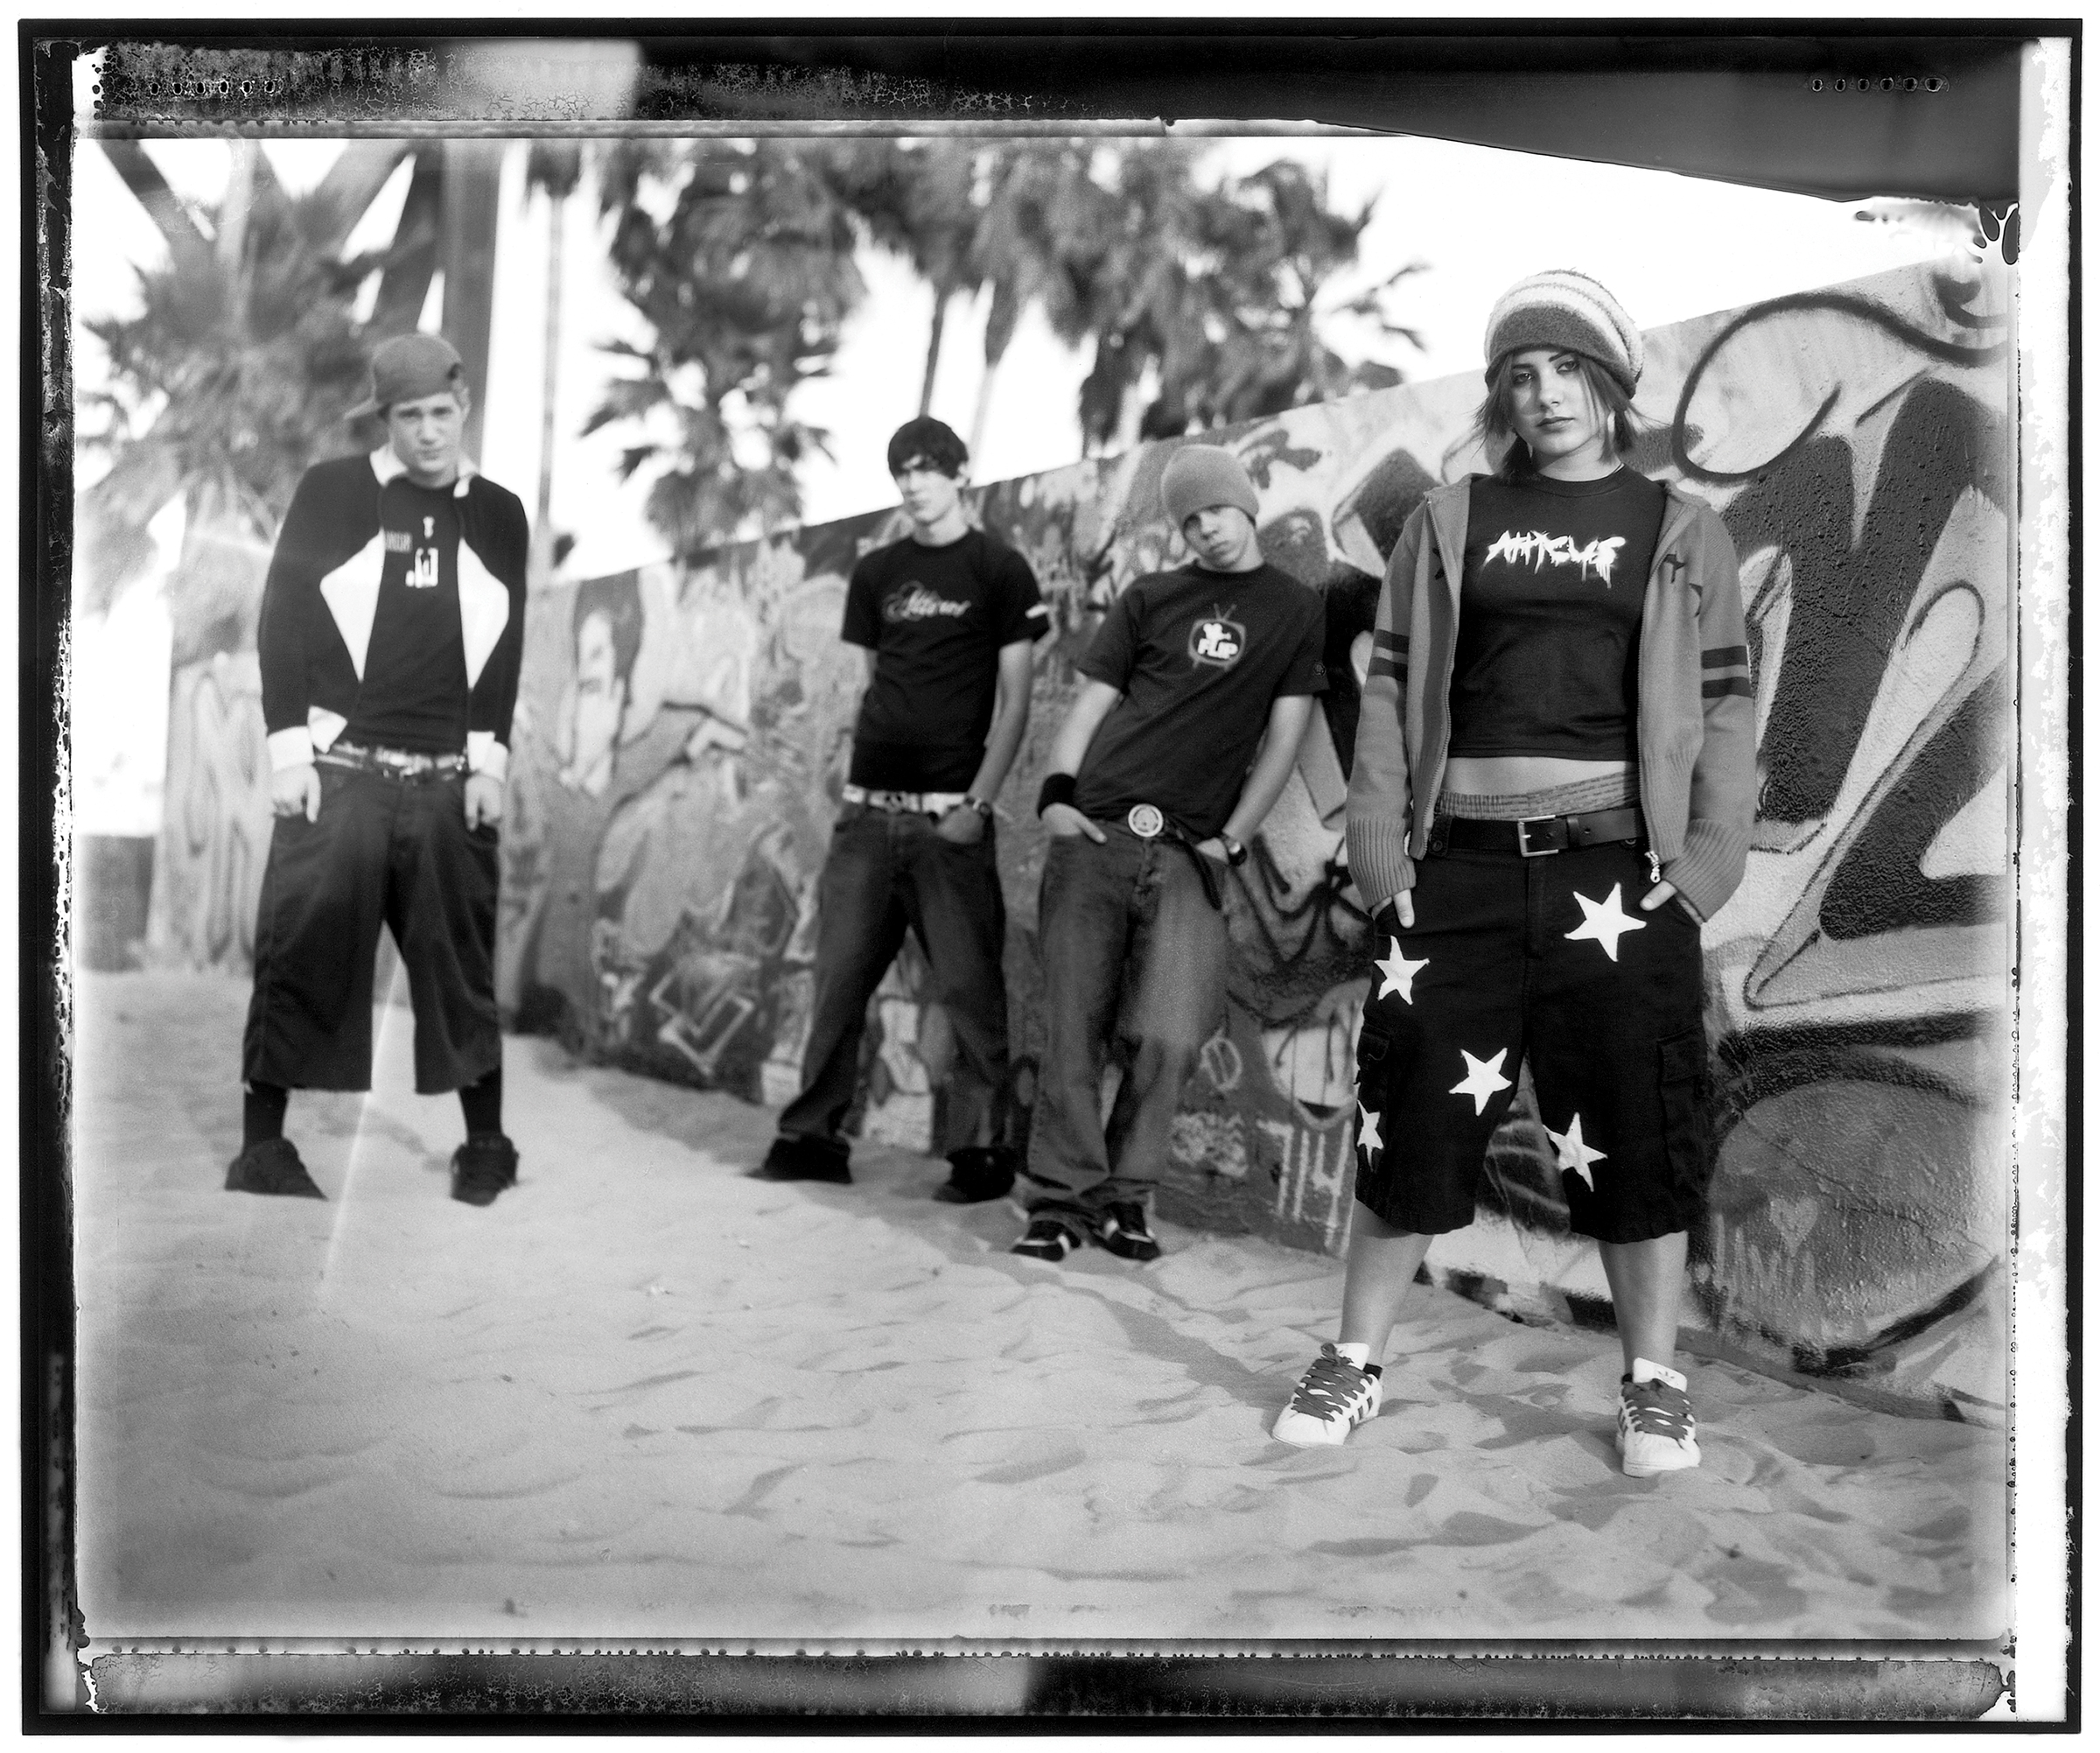 2003: The Fight (Venice Beach, CA)